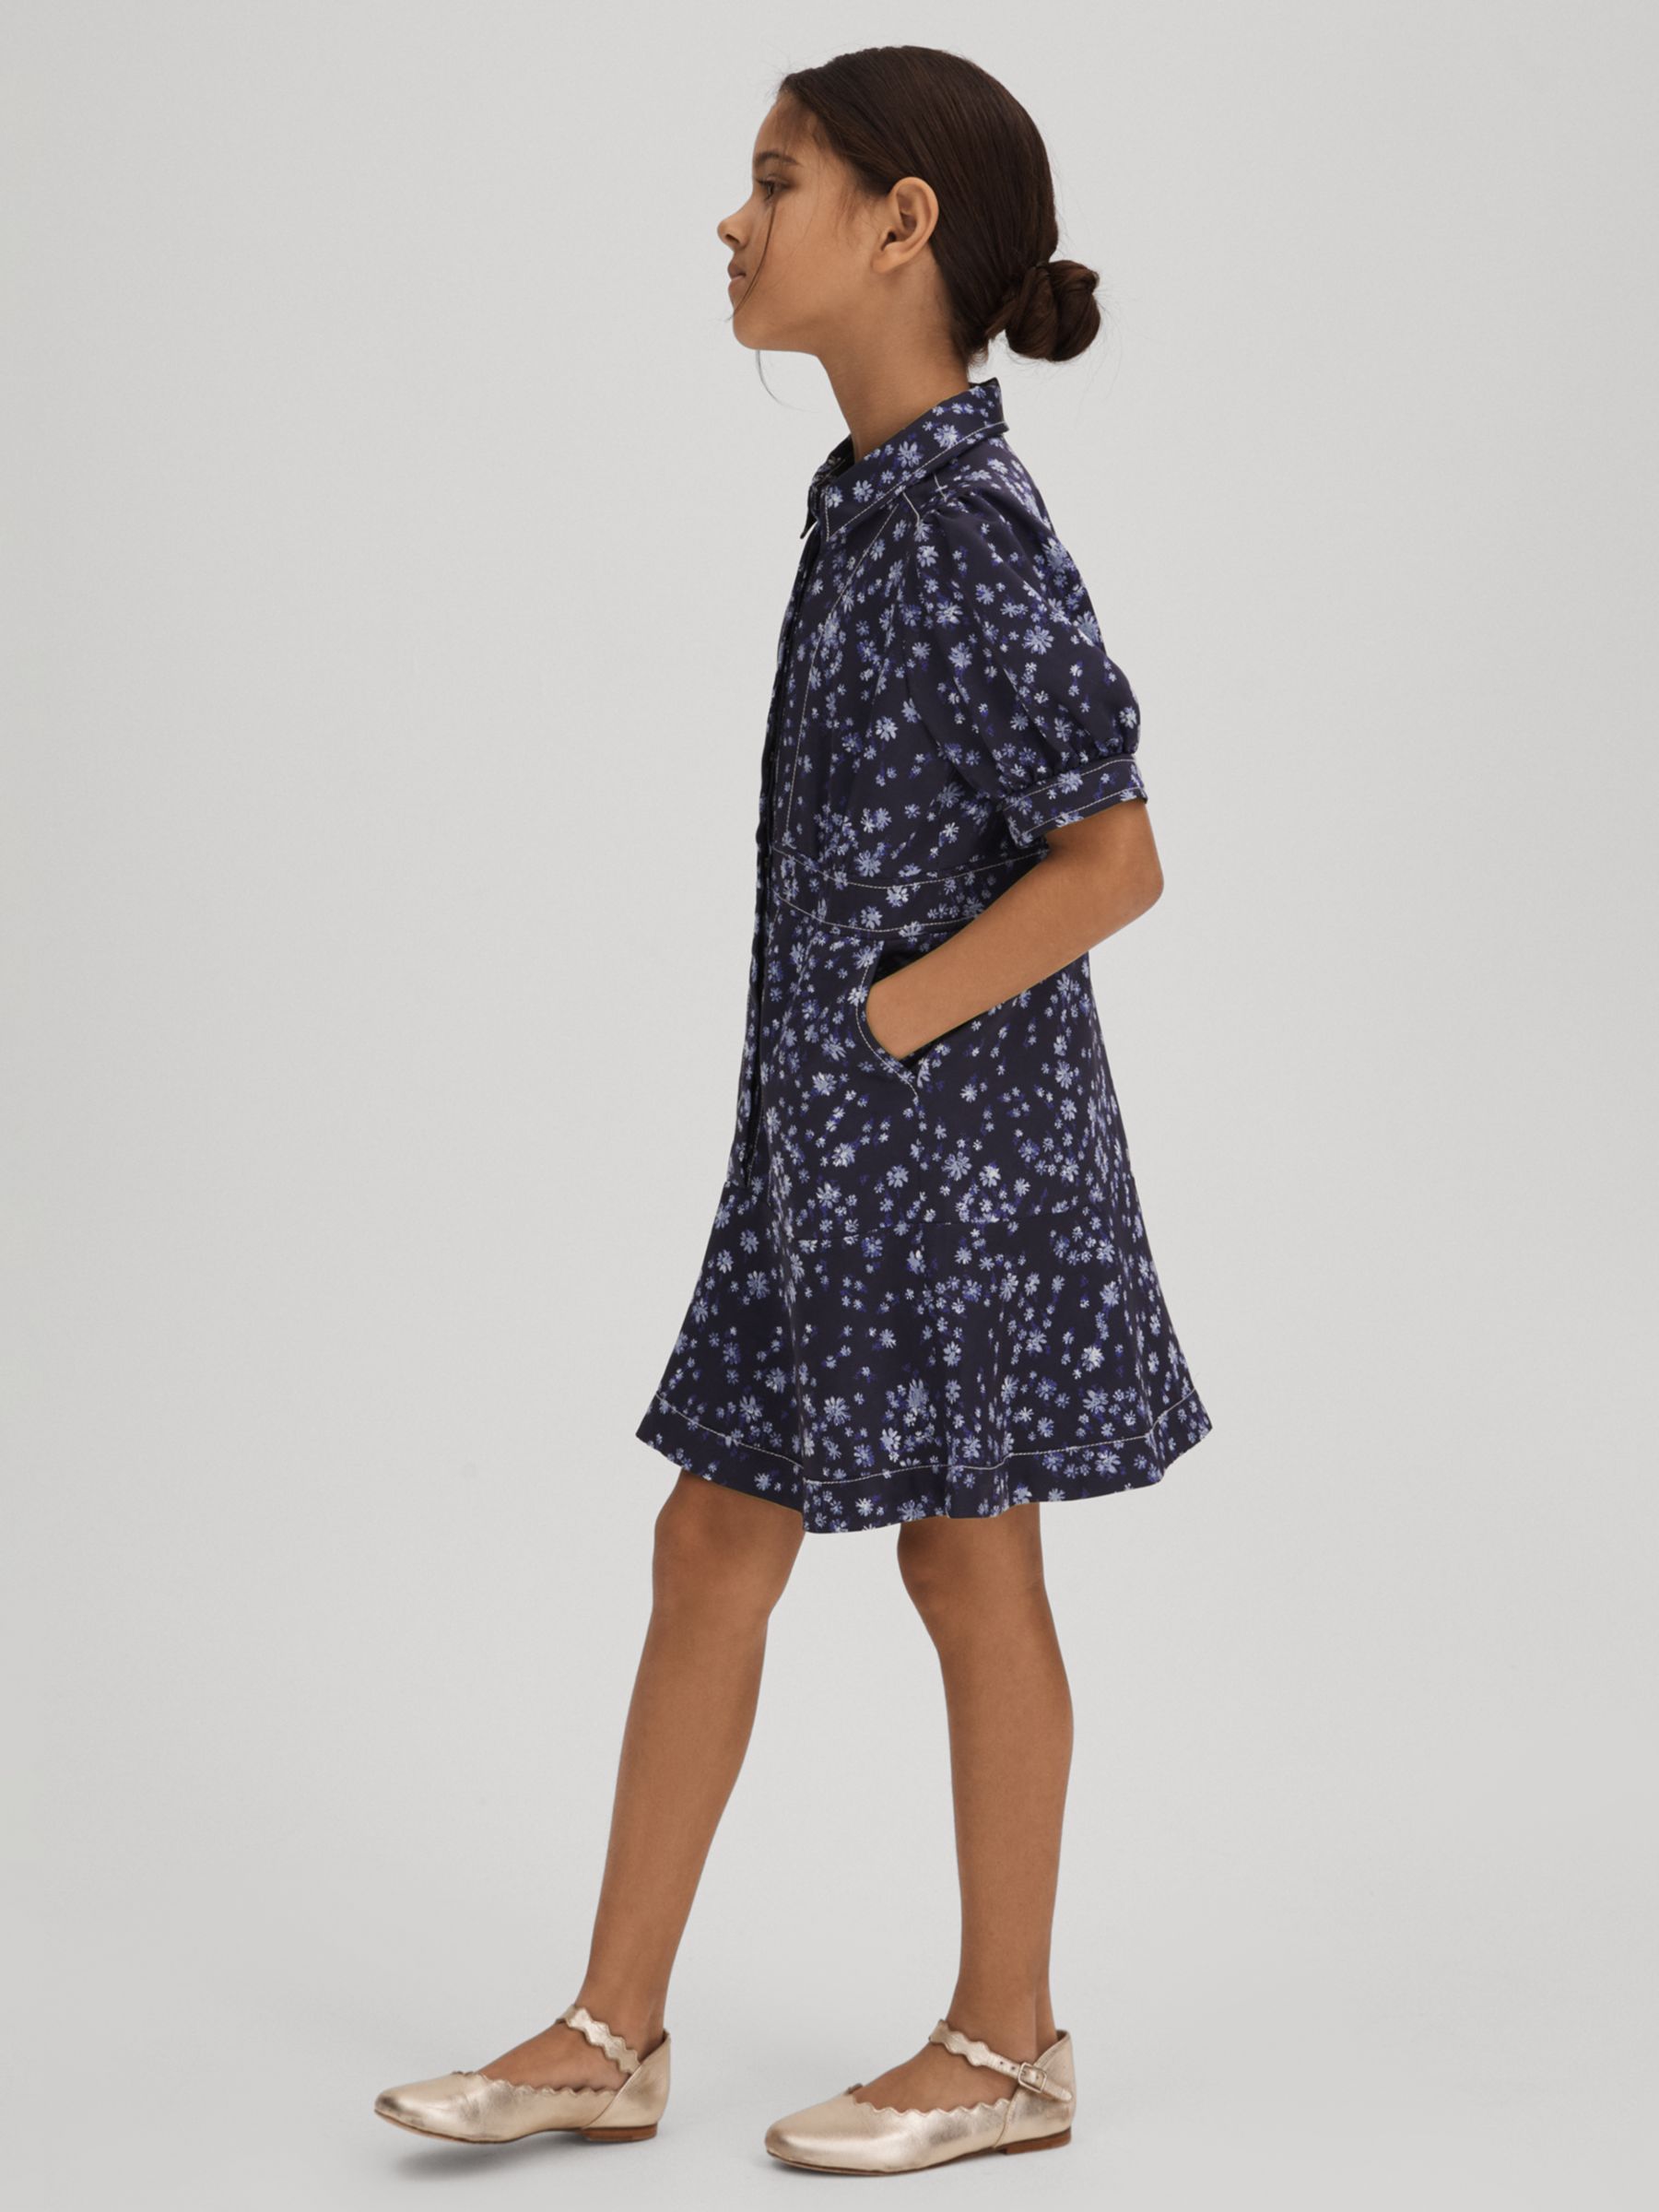 Buy Reiss Kids' Joanne Floral Print Contrast Stitch Dress, Navy Online at johnlewis.com